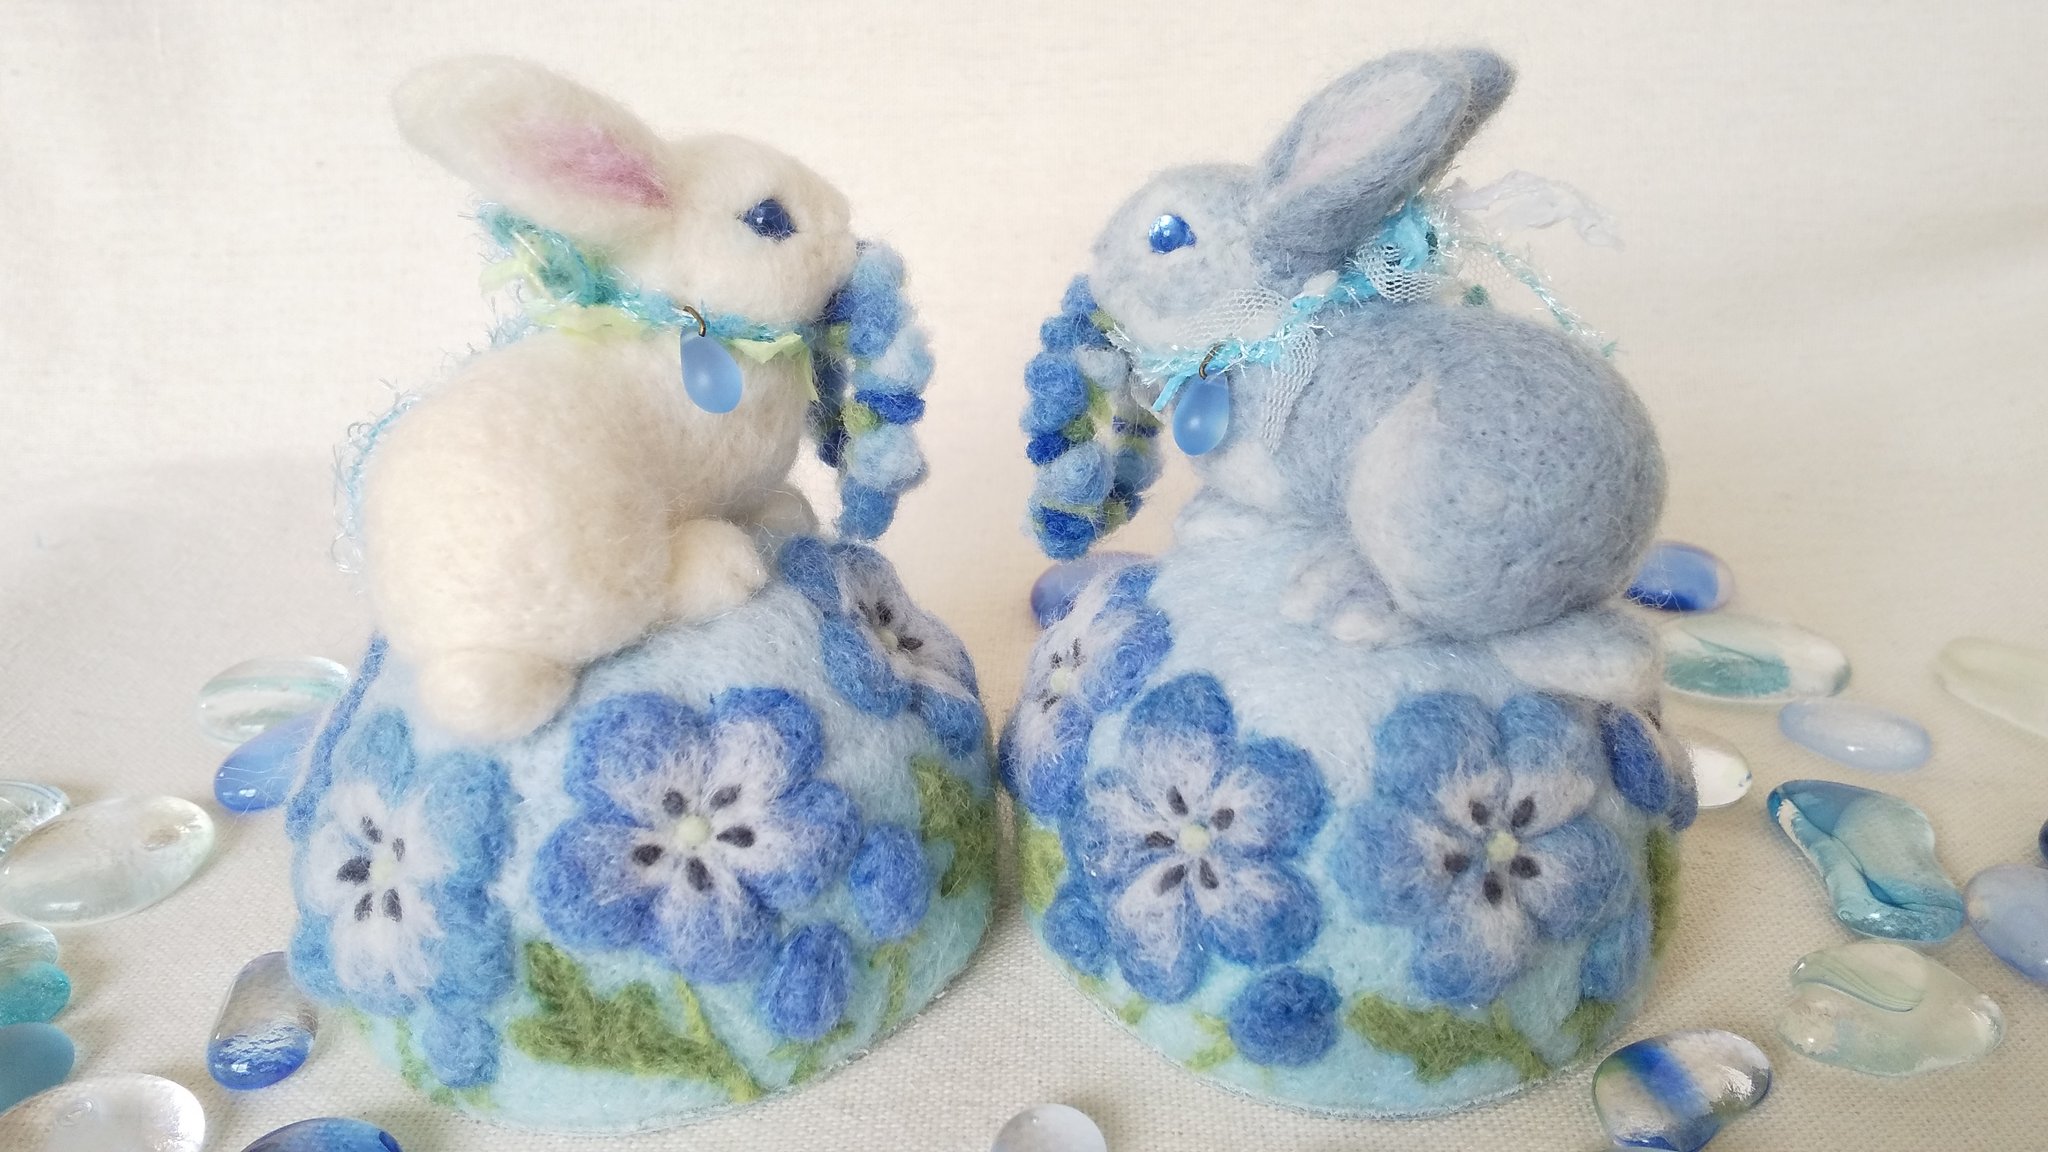 Foxglove ウサギとネモフィラ モフィラの花畑とウサギの針刺し ウサギの毛色はホワイトとブルーグレー 目の色は透き通る空色 下地はスカイブルーとホライズンブルーのグラデーションにしました ネモフィラの花色は3色 様々な青色を使った作品